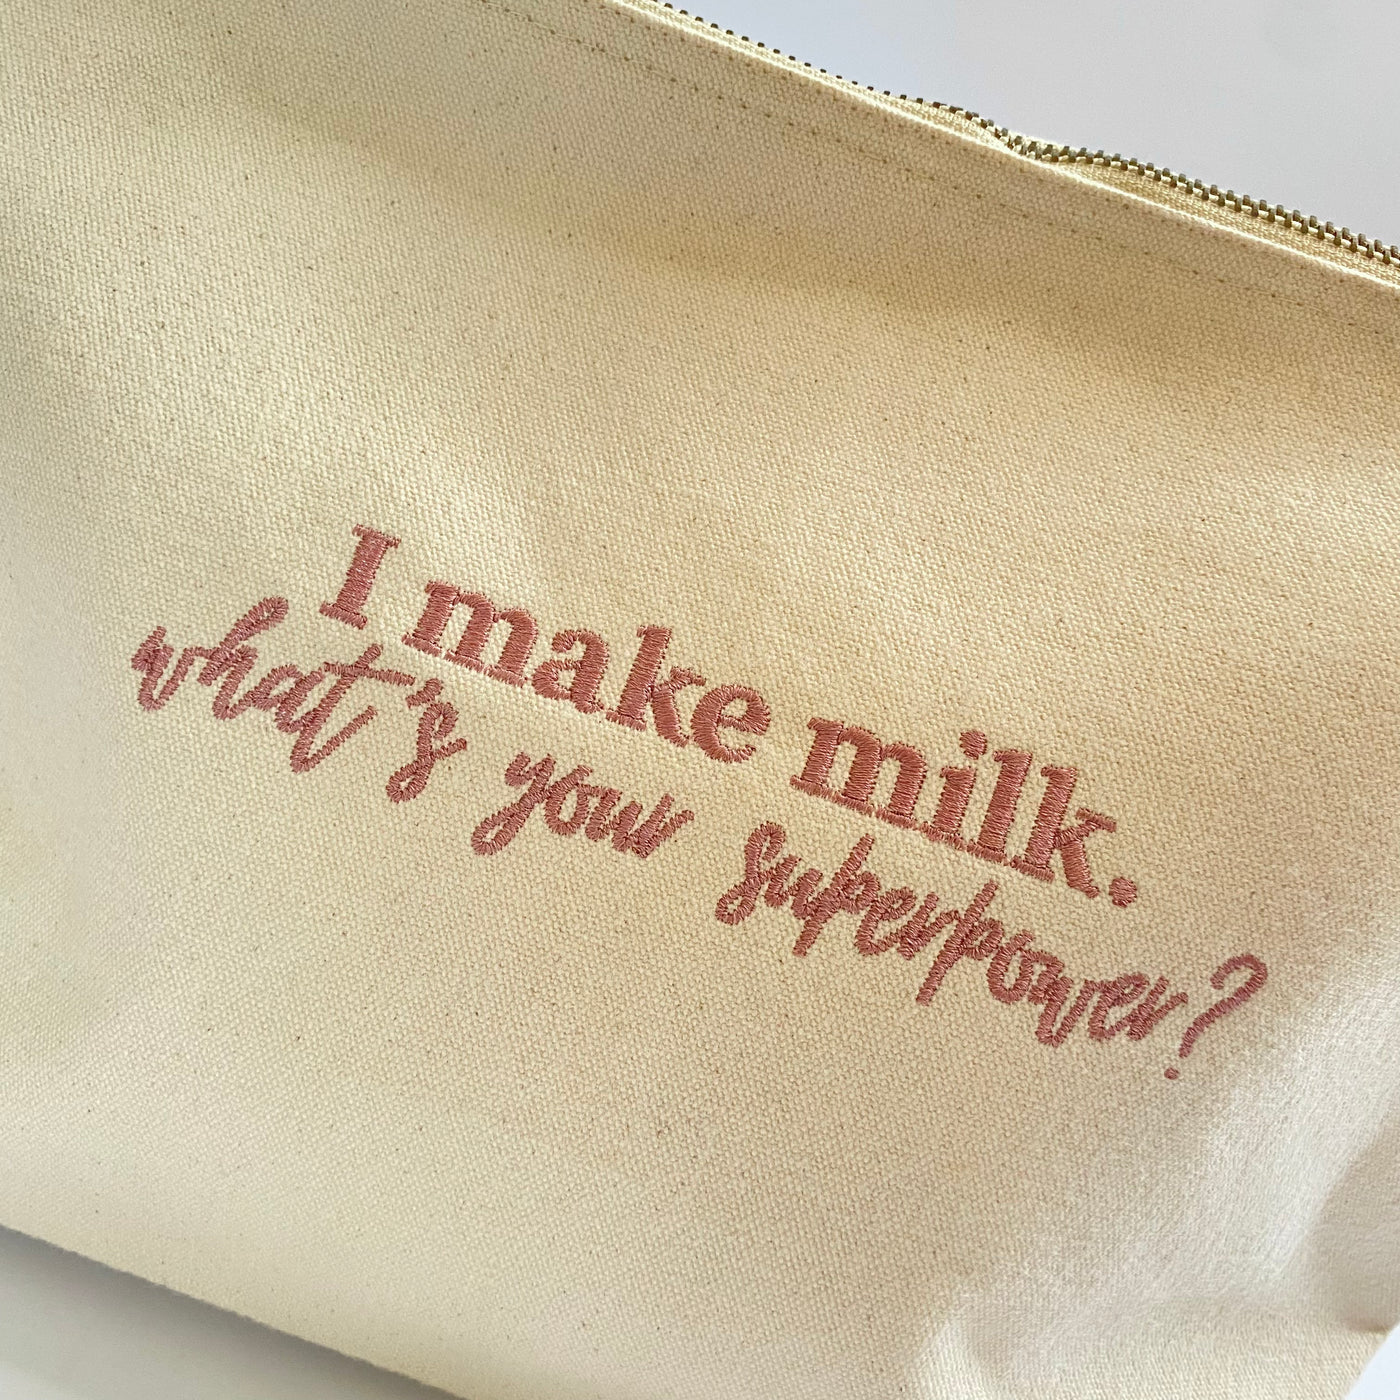 'I Make Milk' Zip Pouch – 100% Organic Cotton